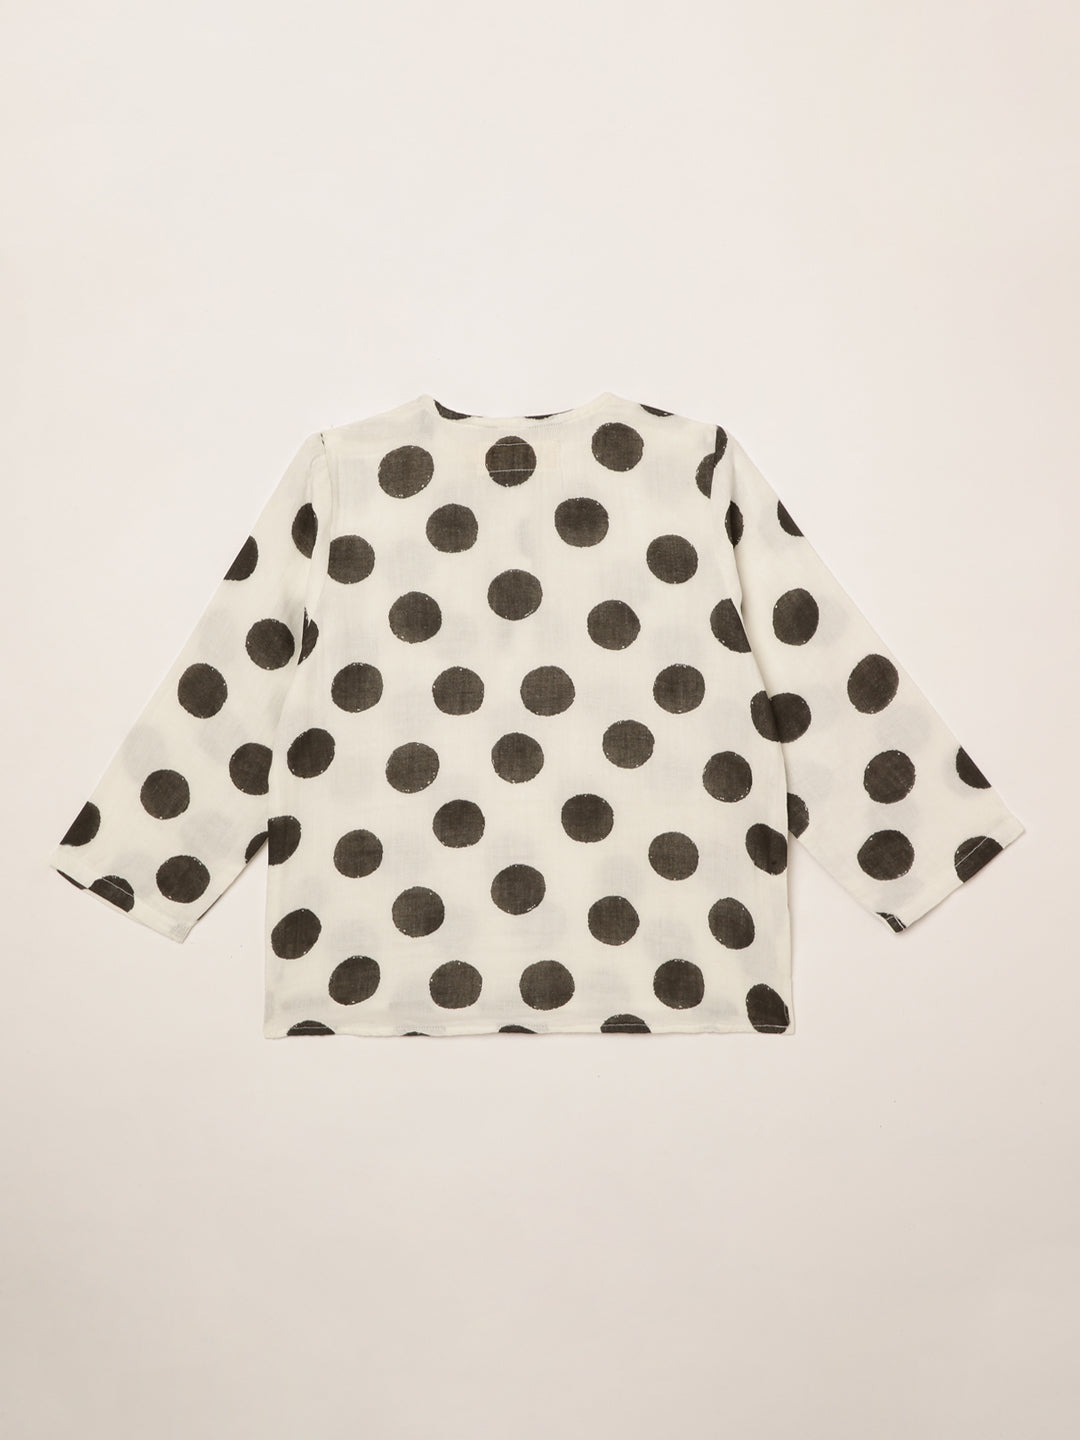 Boys cotton shirt in polka dots 1yr to 8 yrs- Back